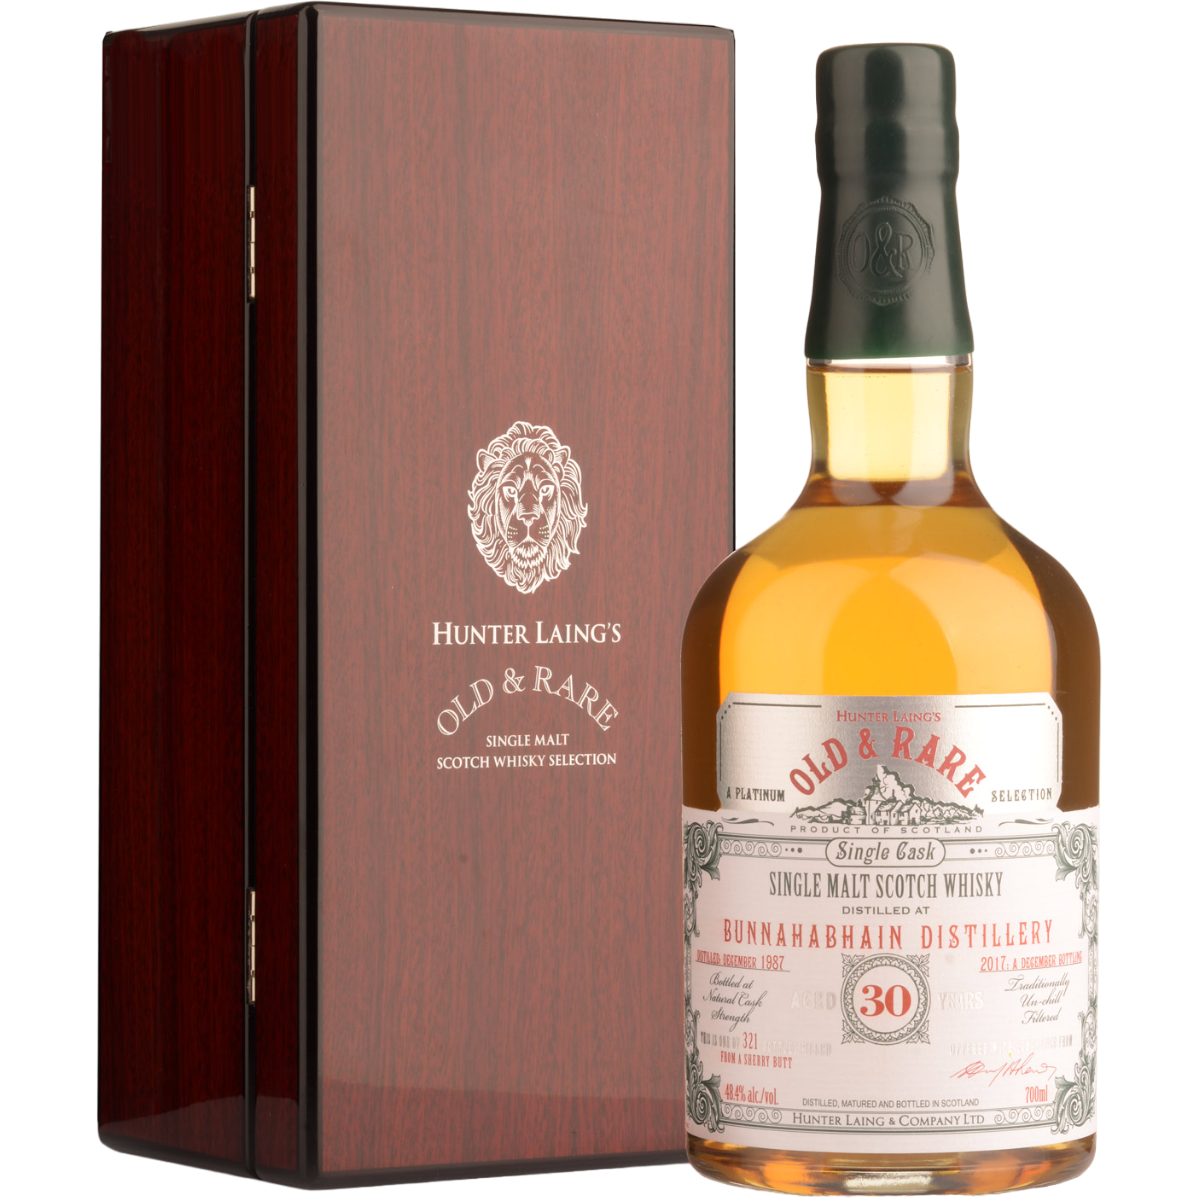 Виски Bunnahabhain 30 Years Old 1987 - Old & Rare 48.4% 0.7 л, в подарочной упаковке - фото 1